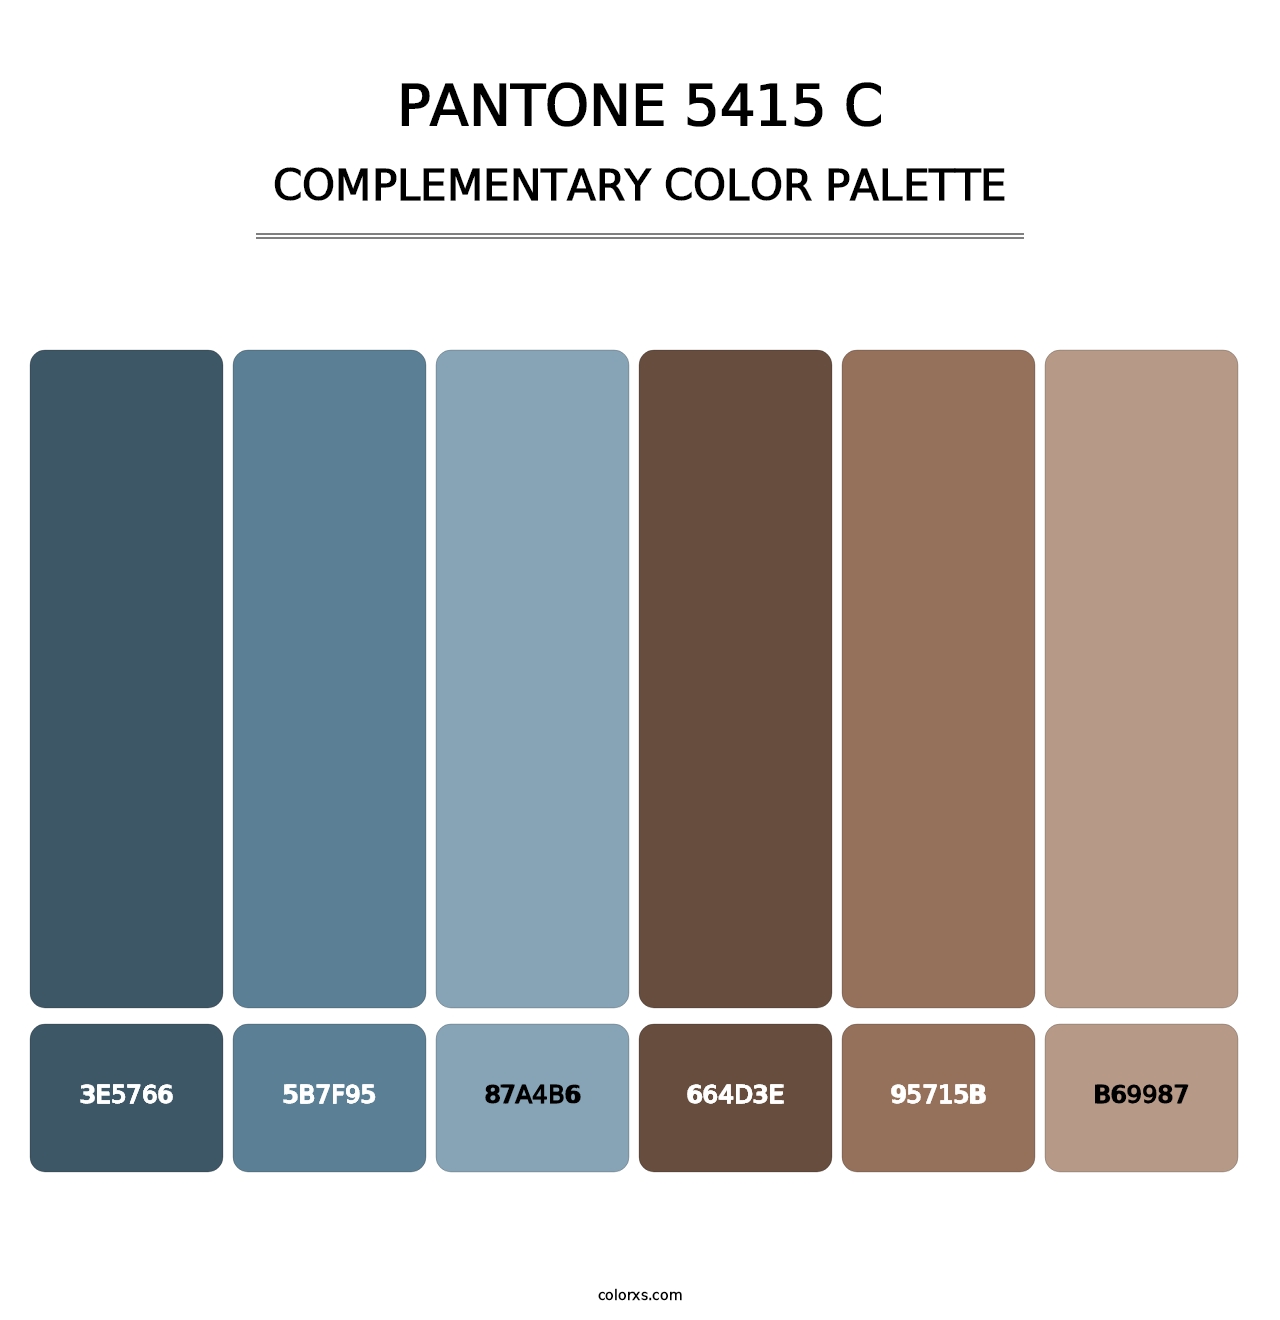 PANTONE 5415 C - Complementary Color Palette